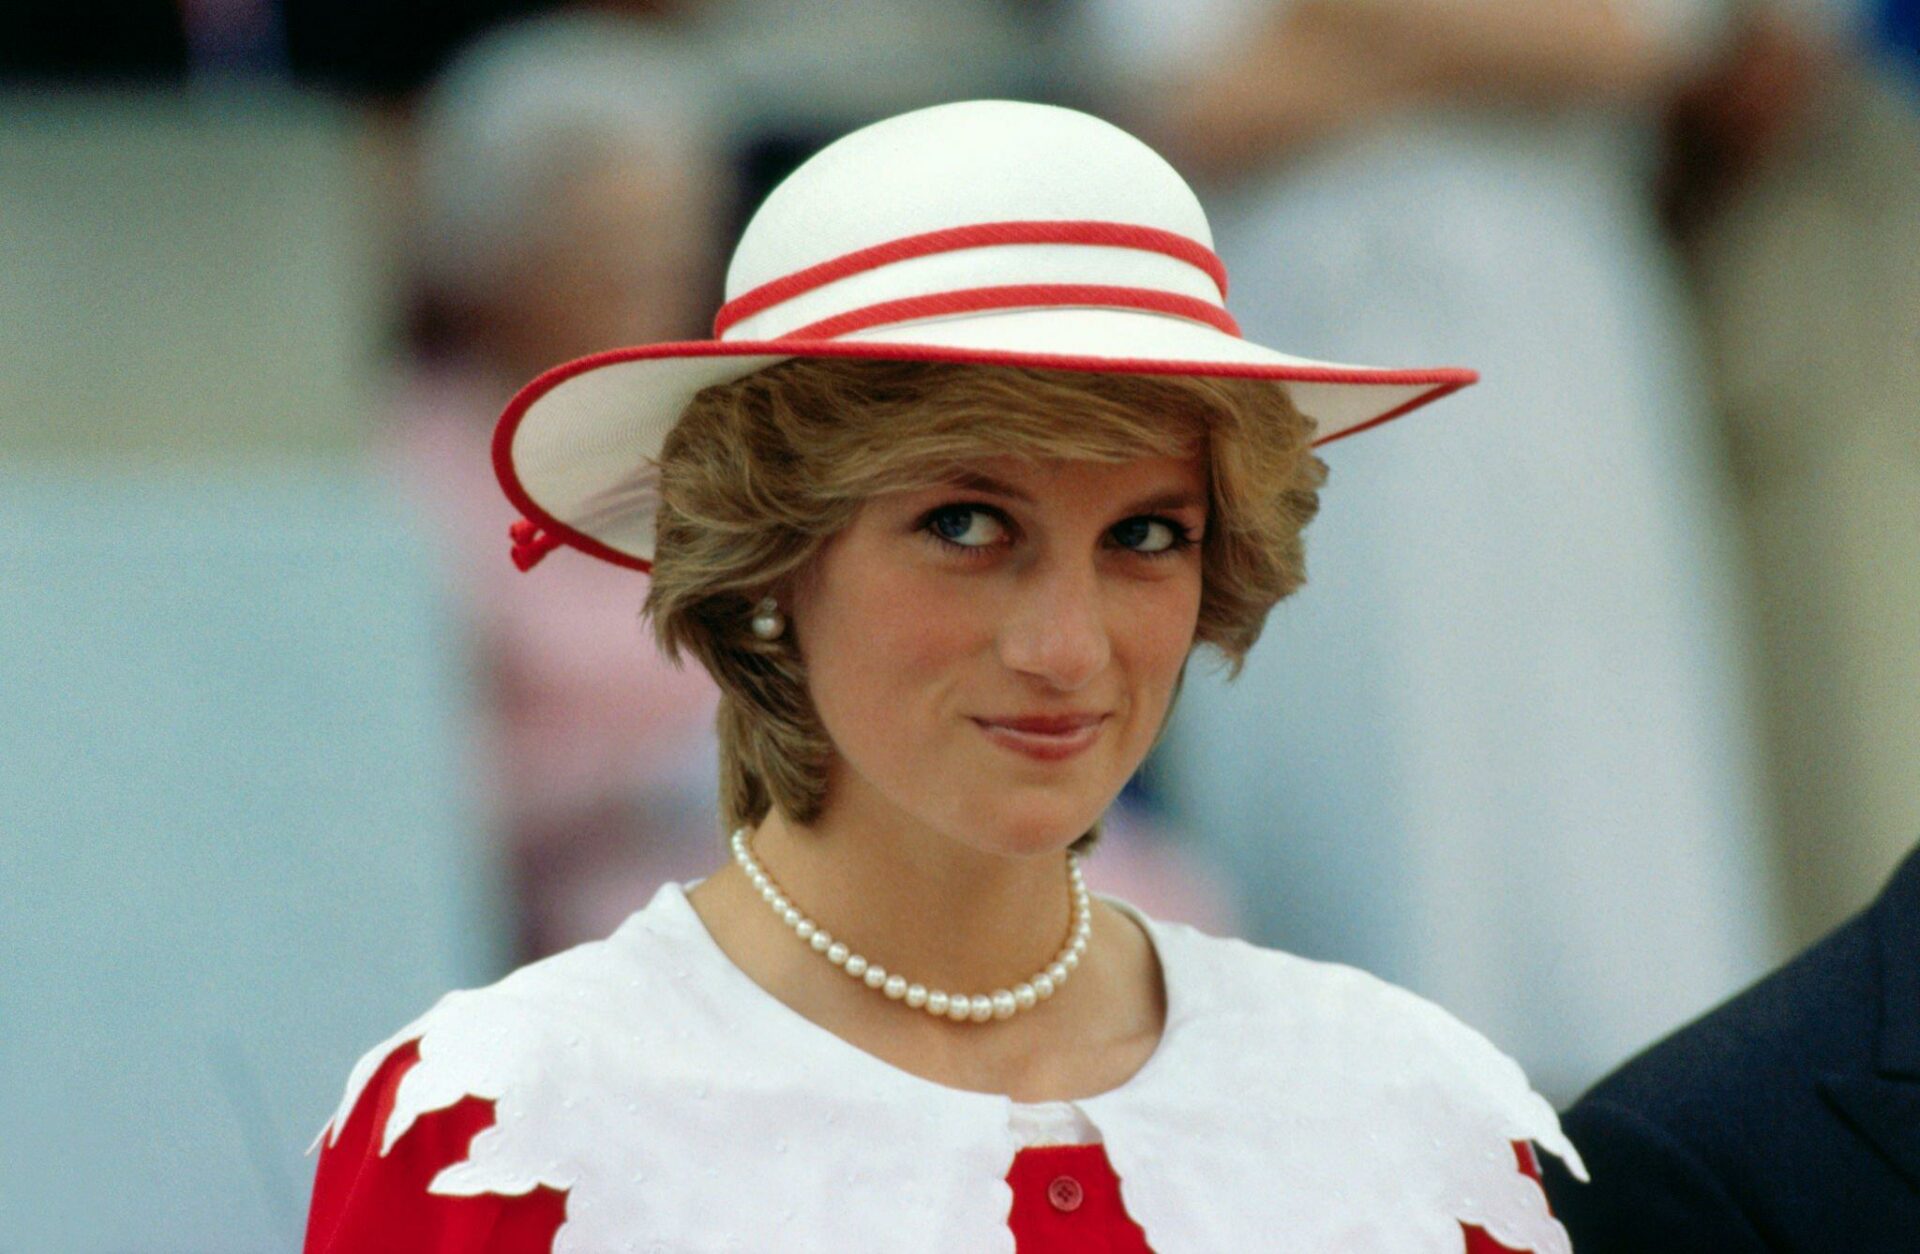 Who is Princess Diana's?